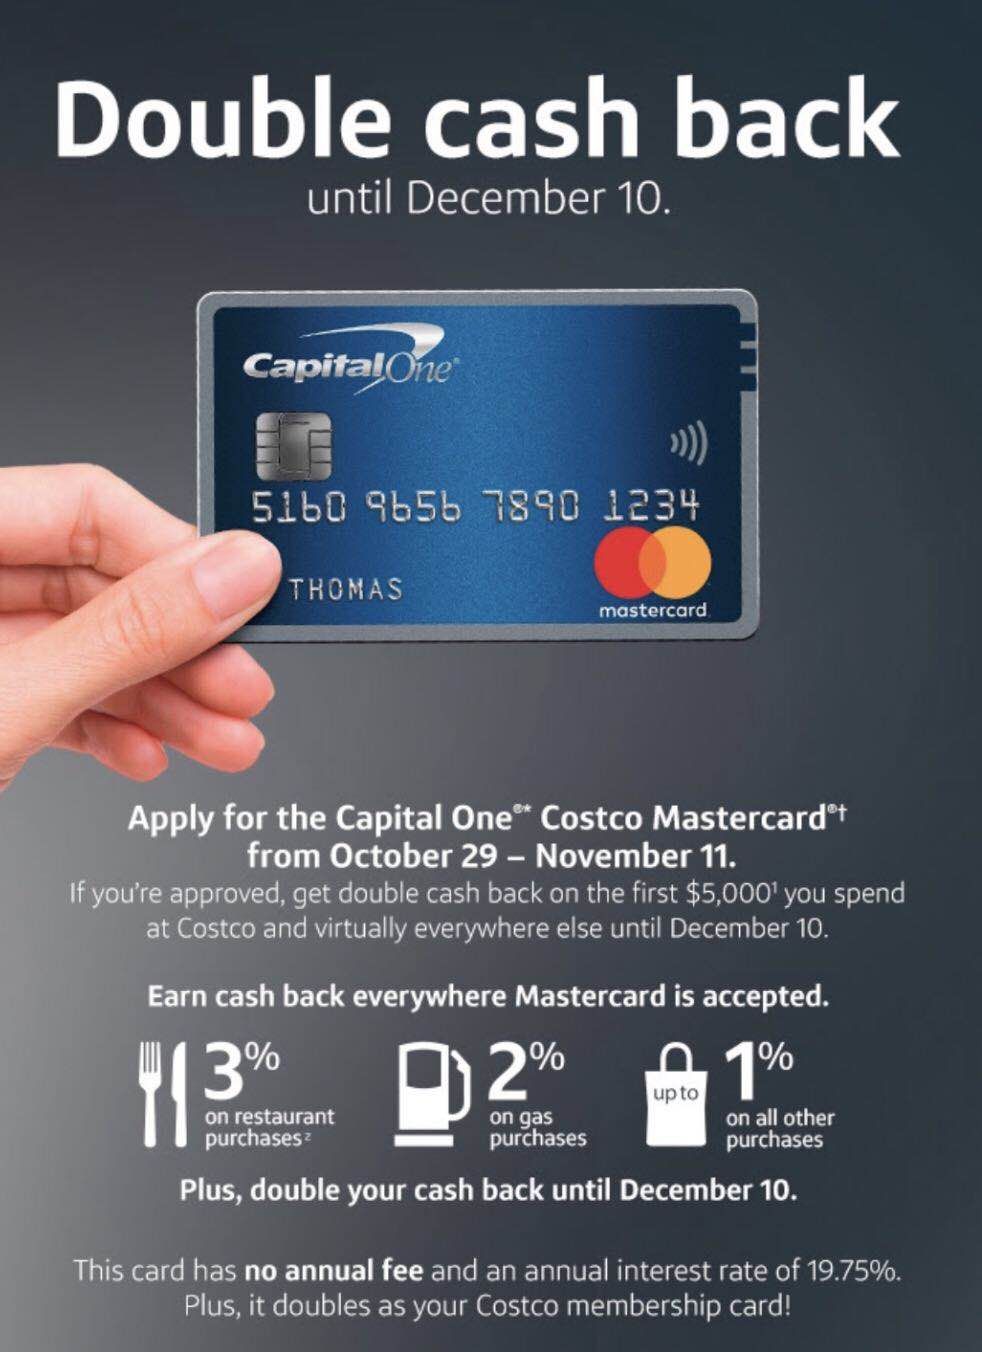 Capital One Costco MasterCard Double Cash Back